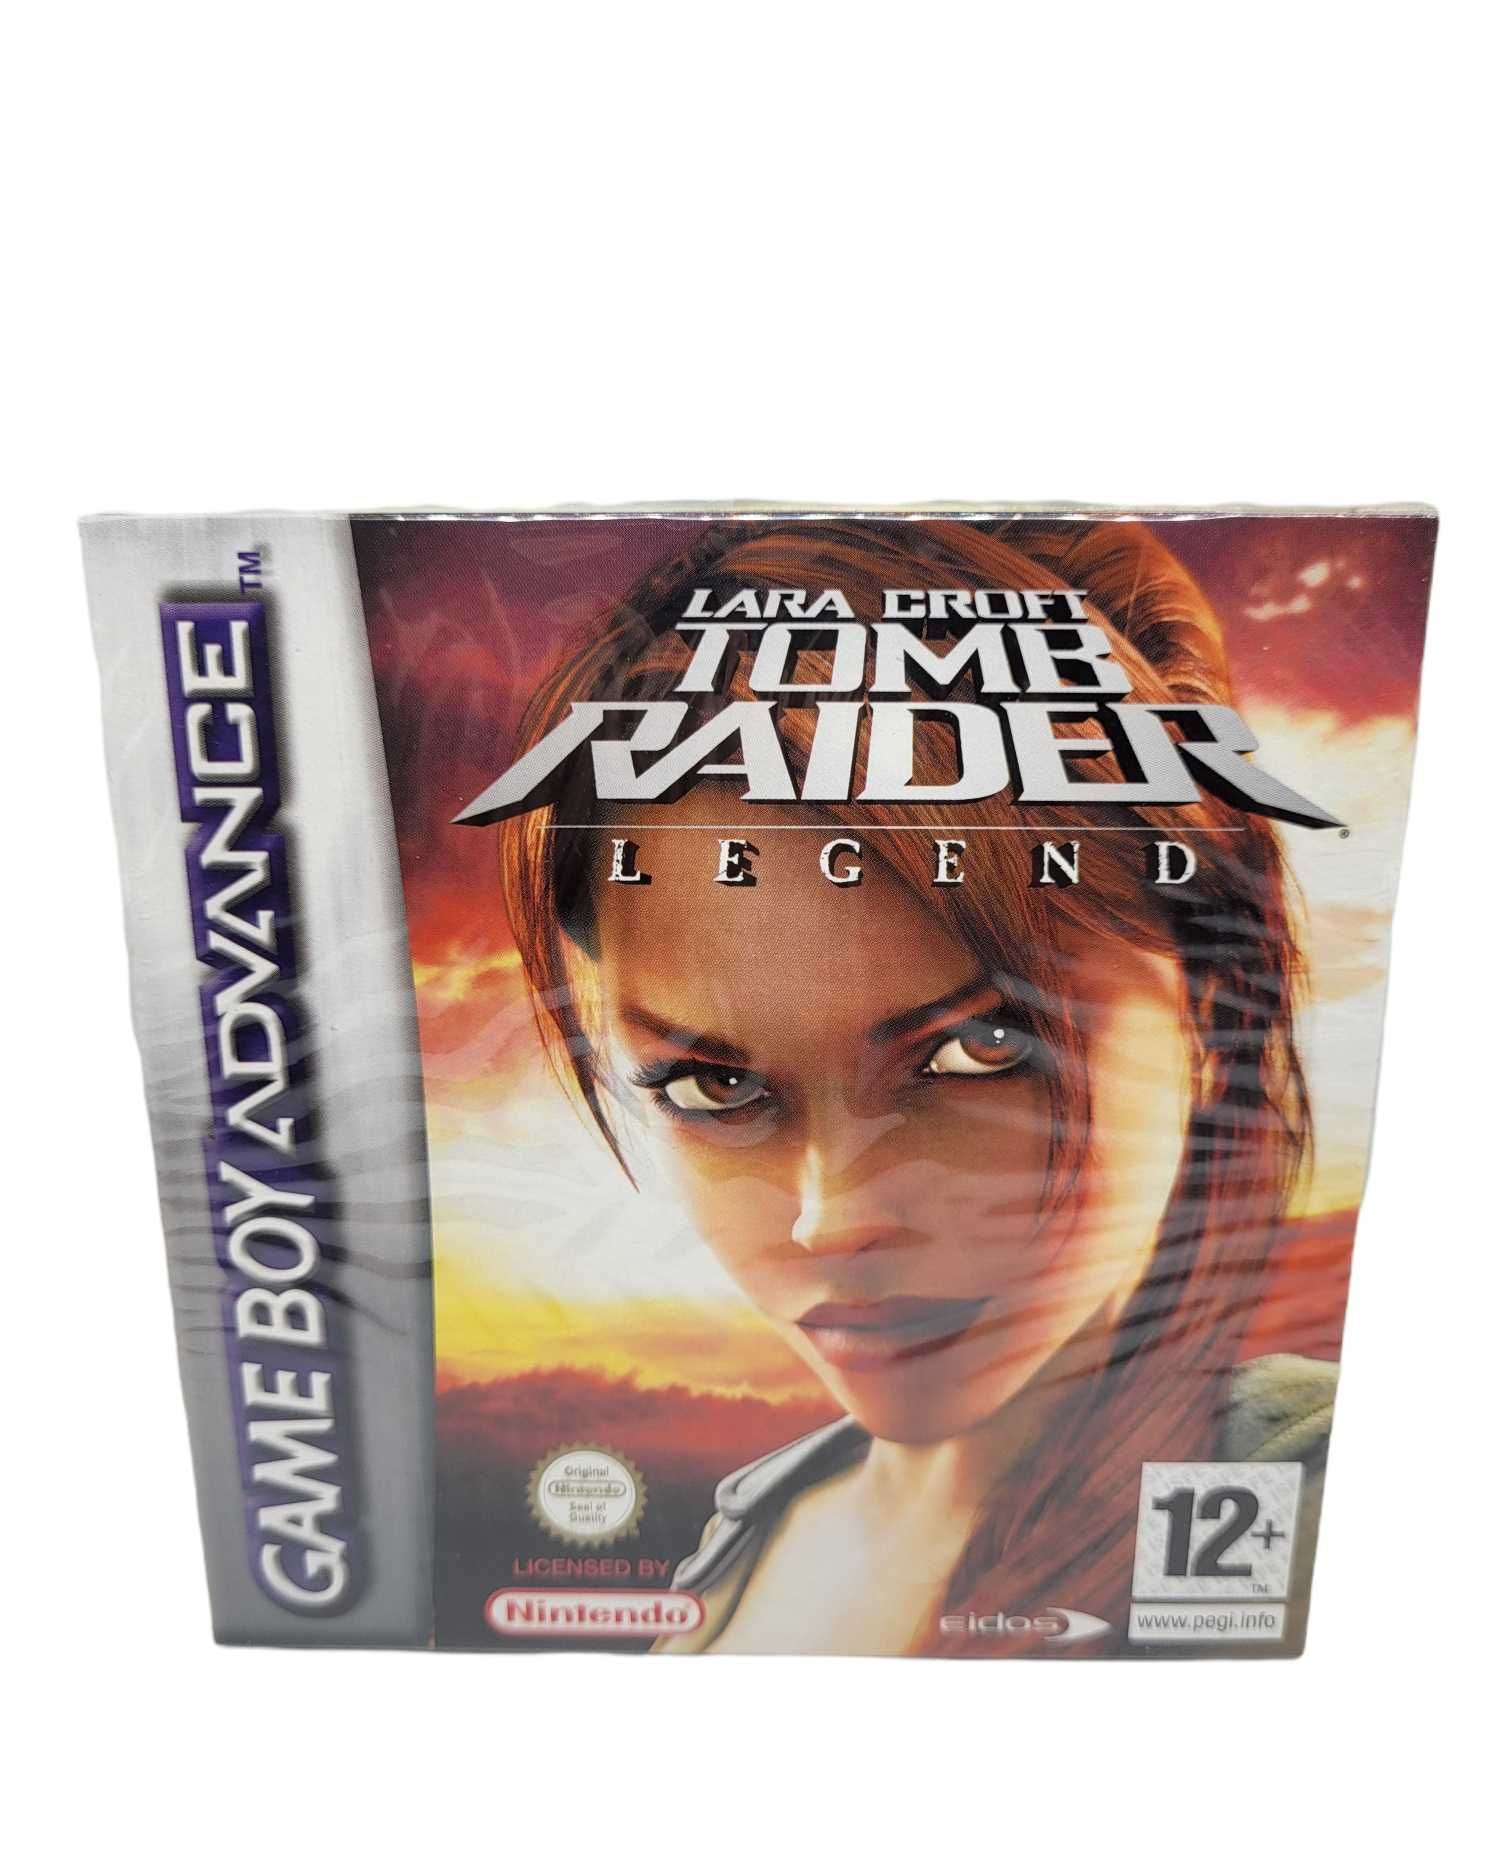 Lara Croft Tomb Raider Legend Game Boy Gameboy Advance GBA